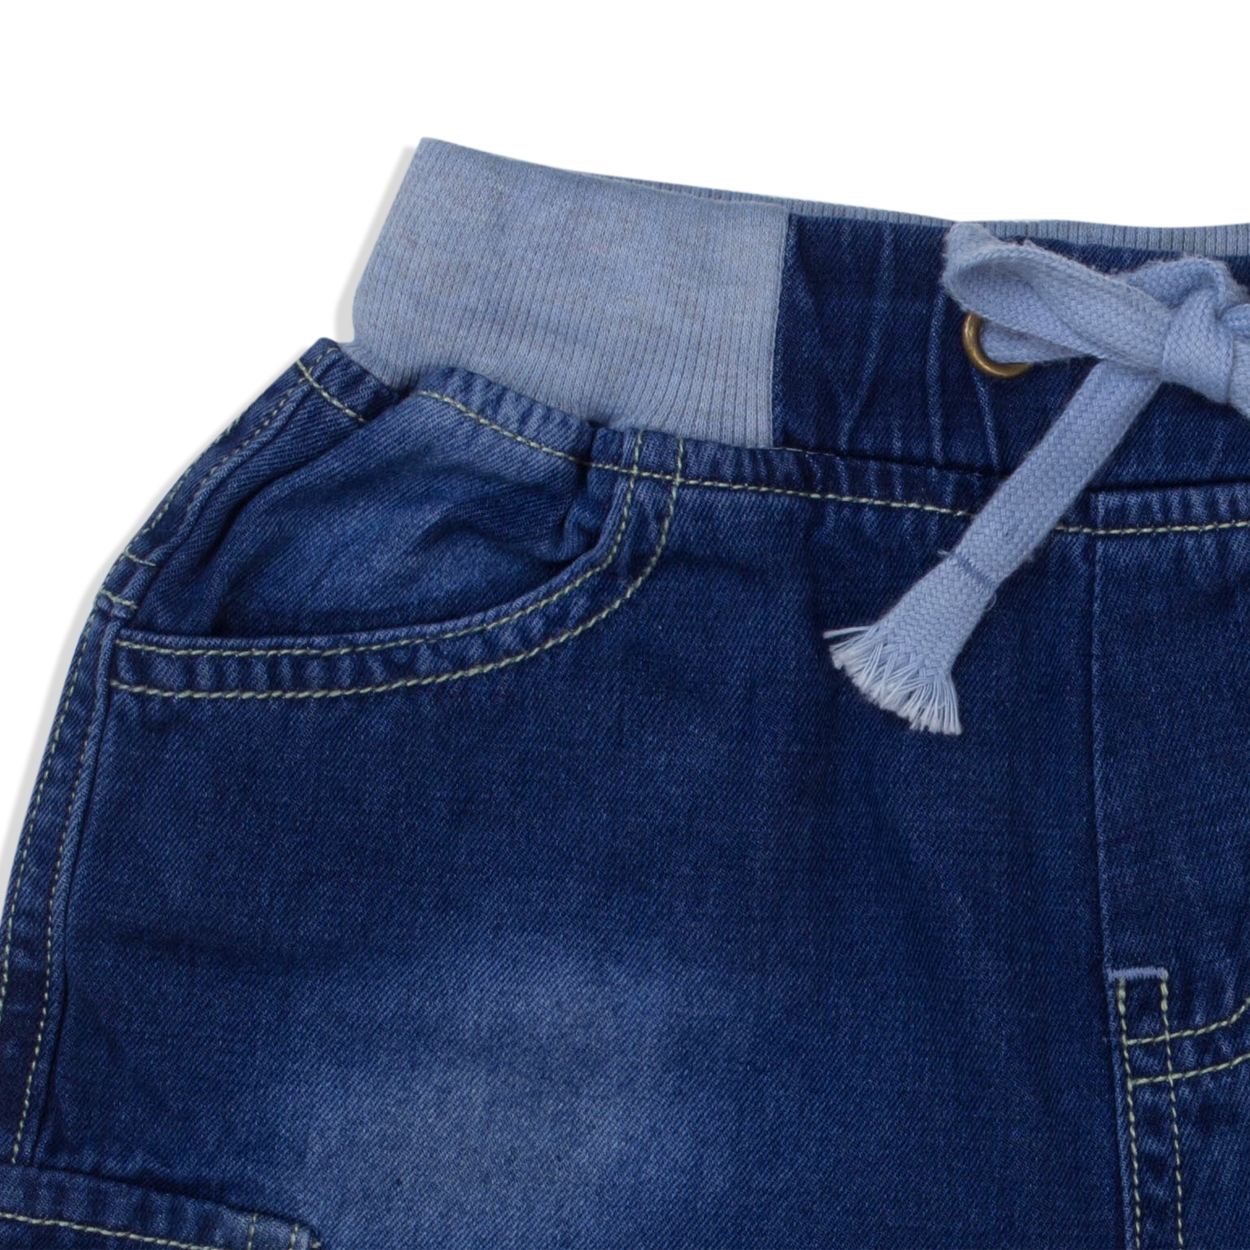 Quần jeans bé trai ngắn B057001 (6T,Xanh jean)